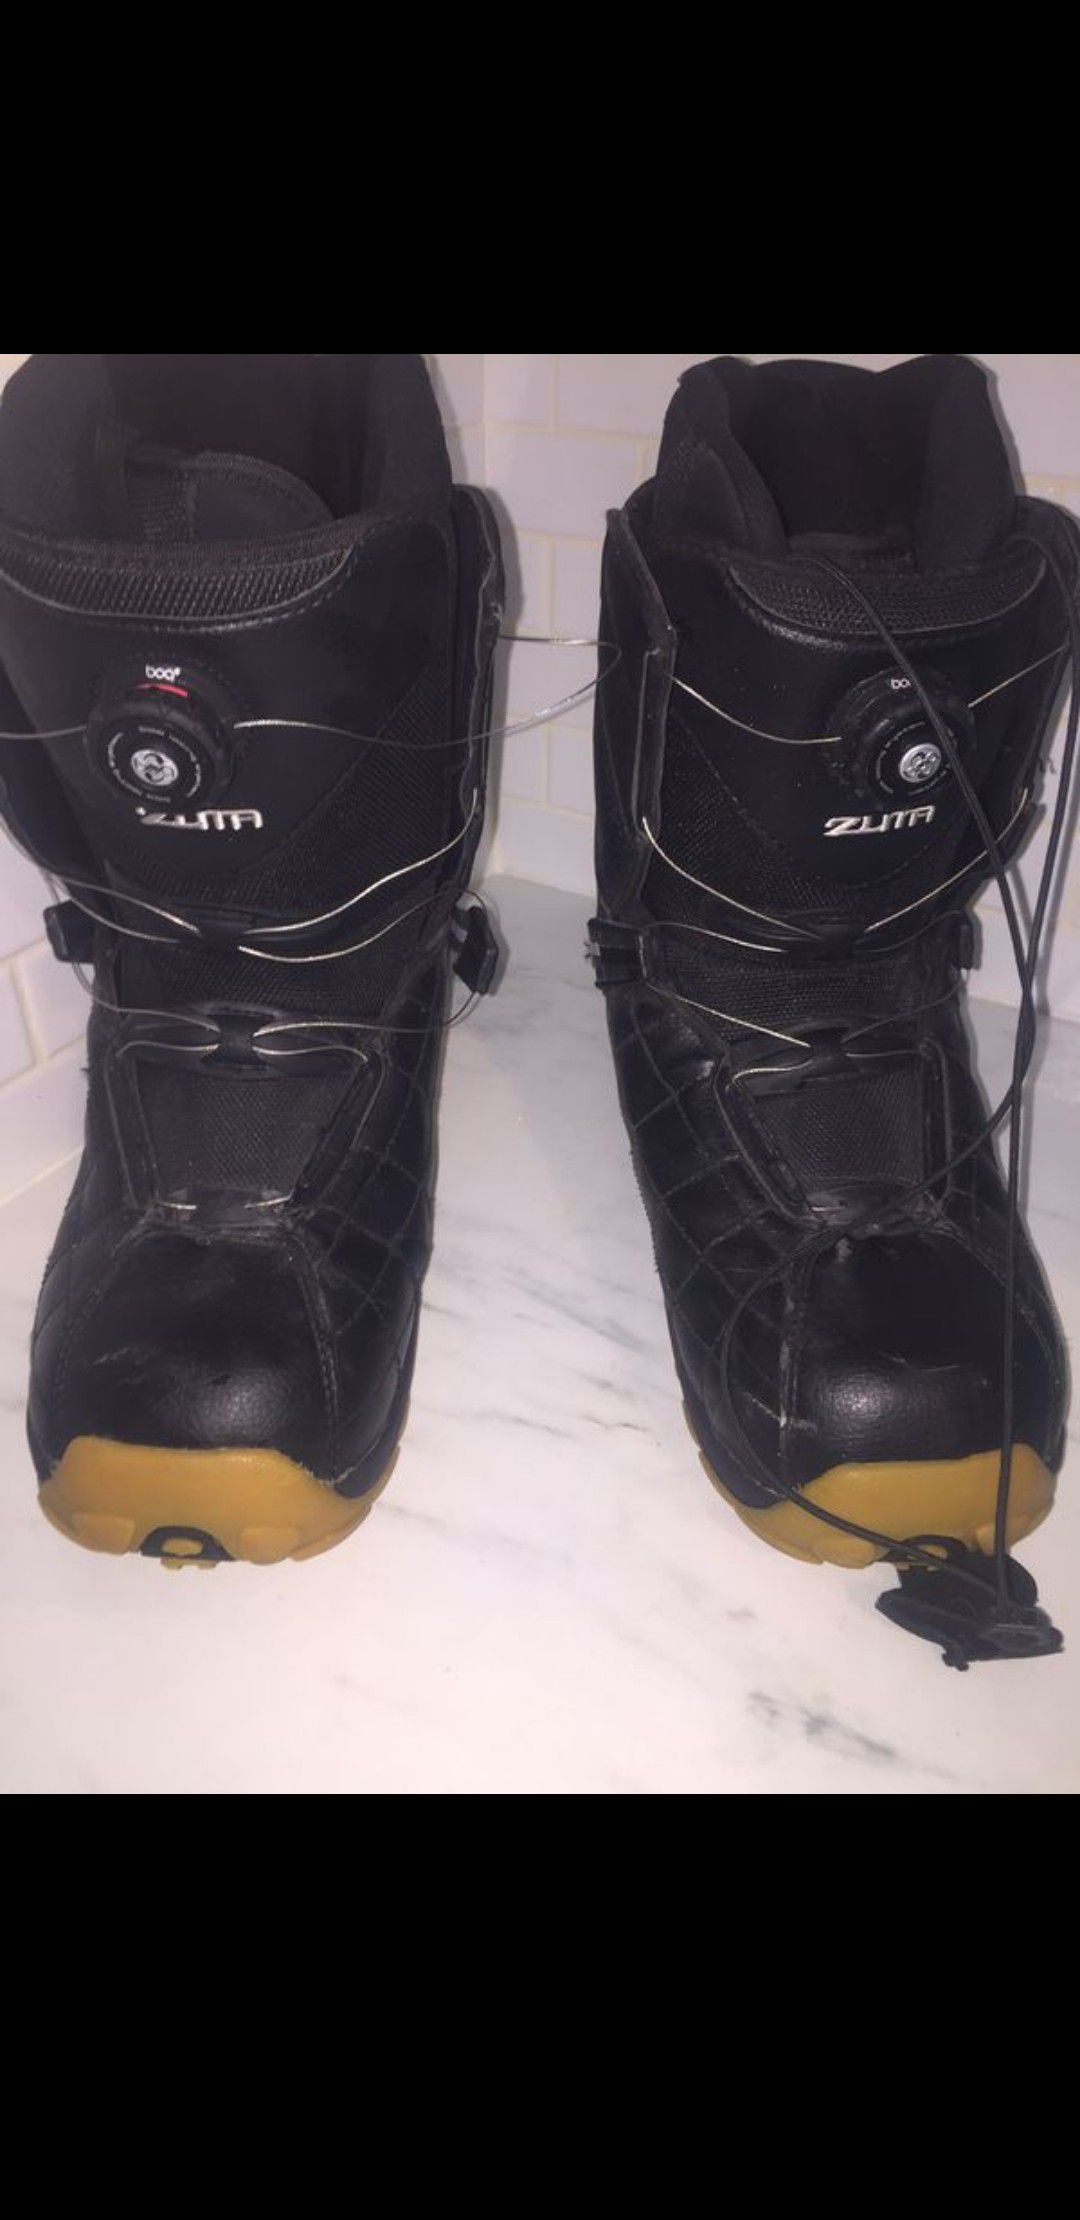 Snowboard Boots BOA size 11 Mens